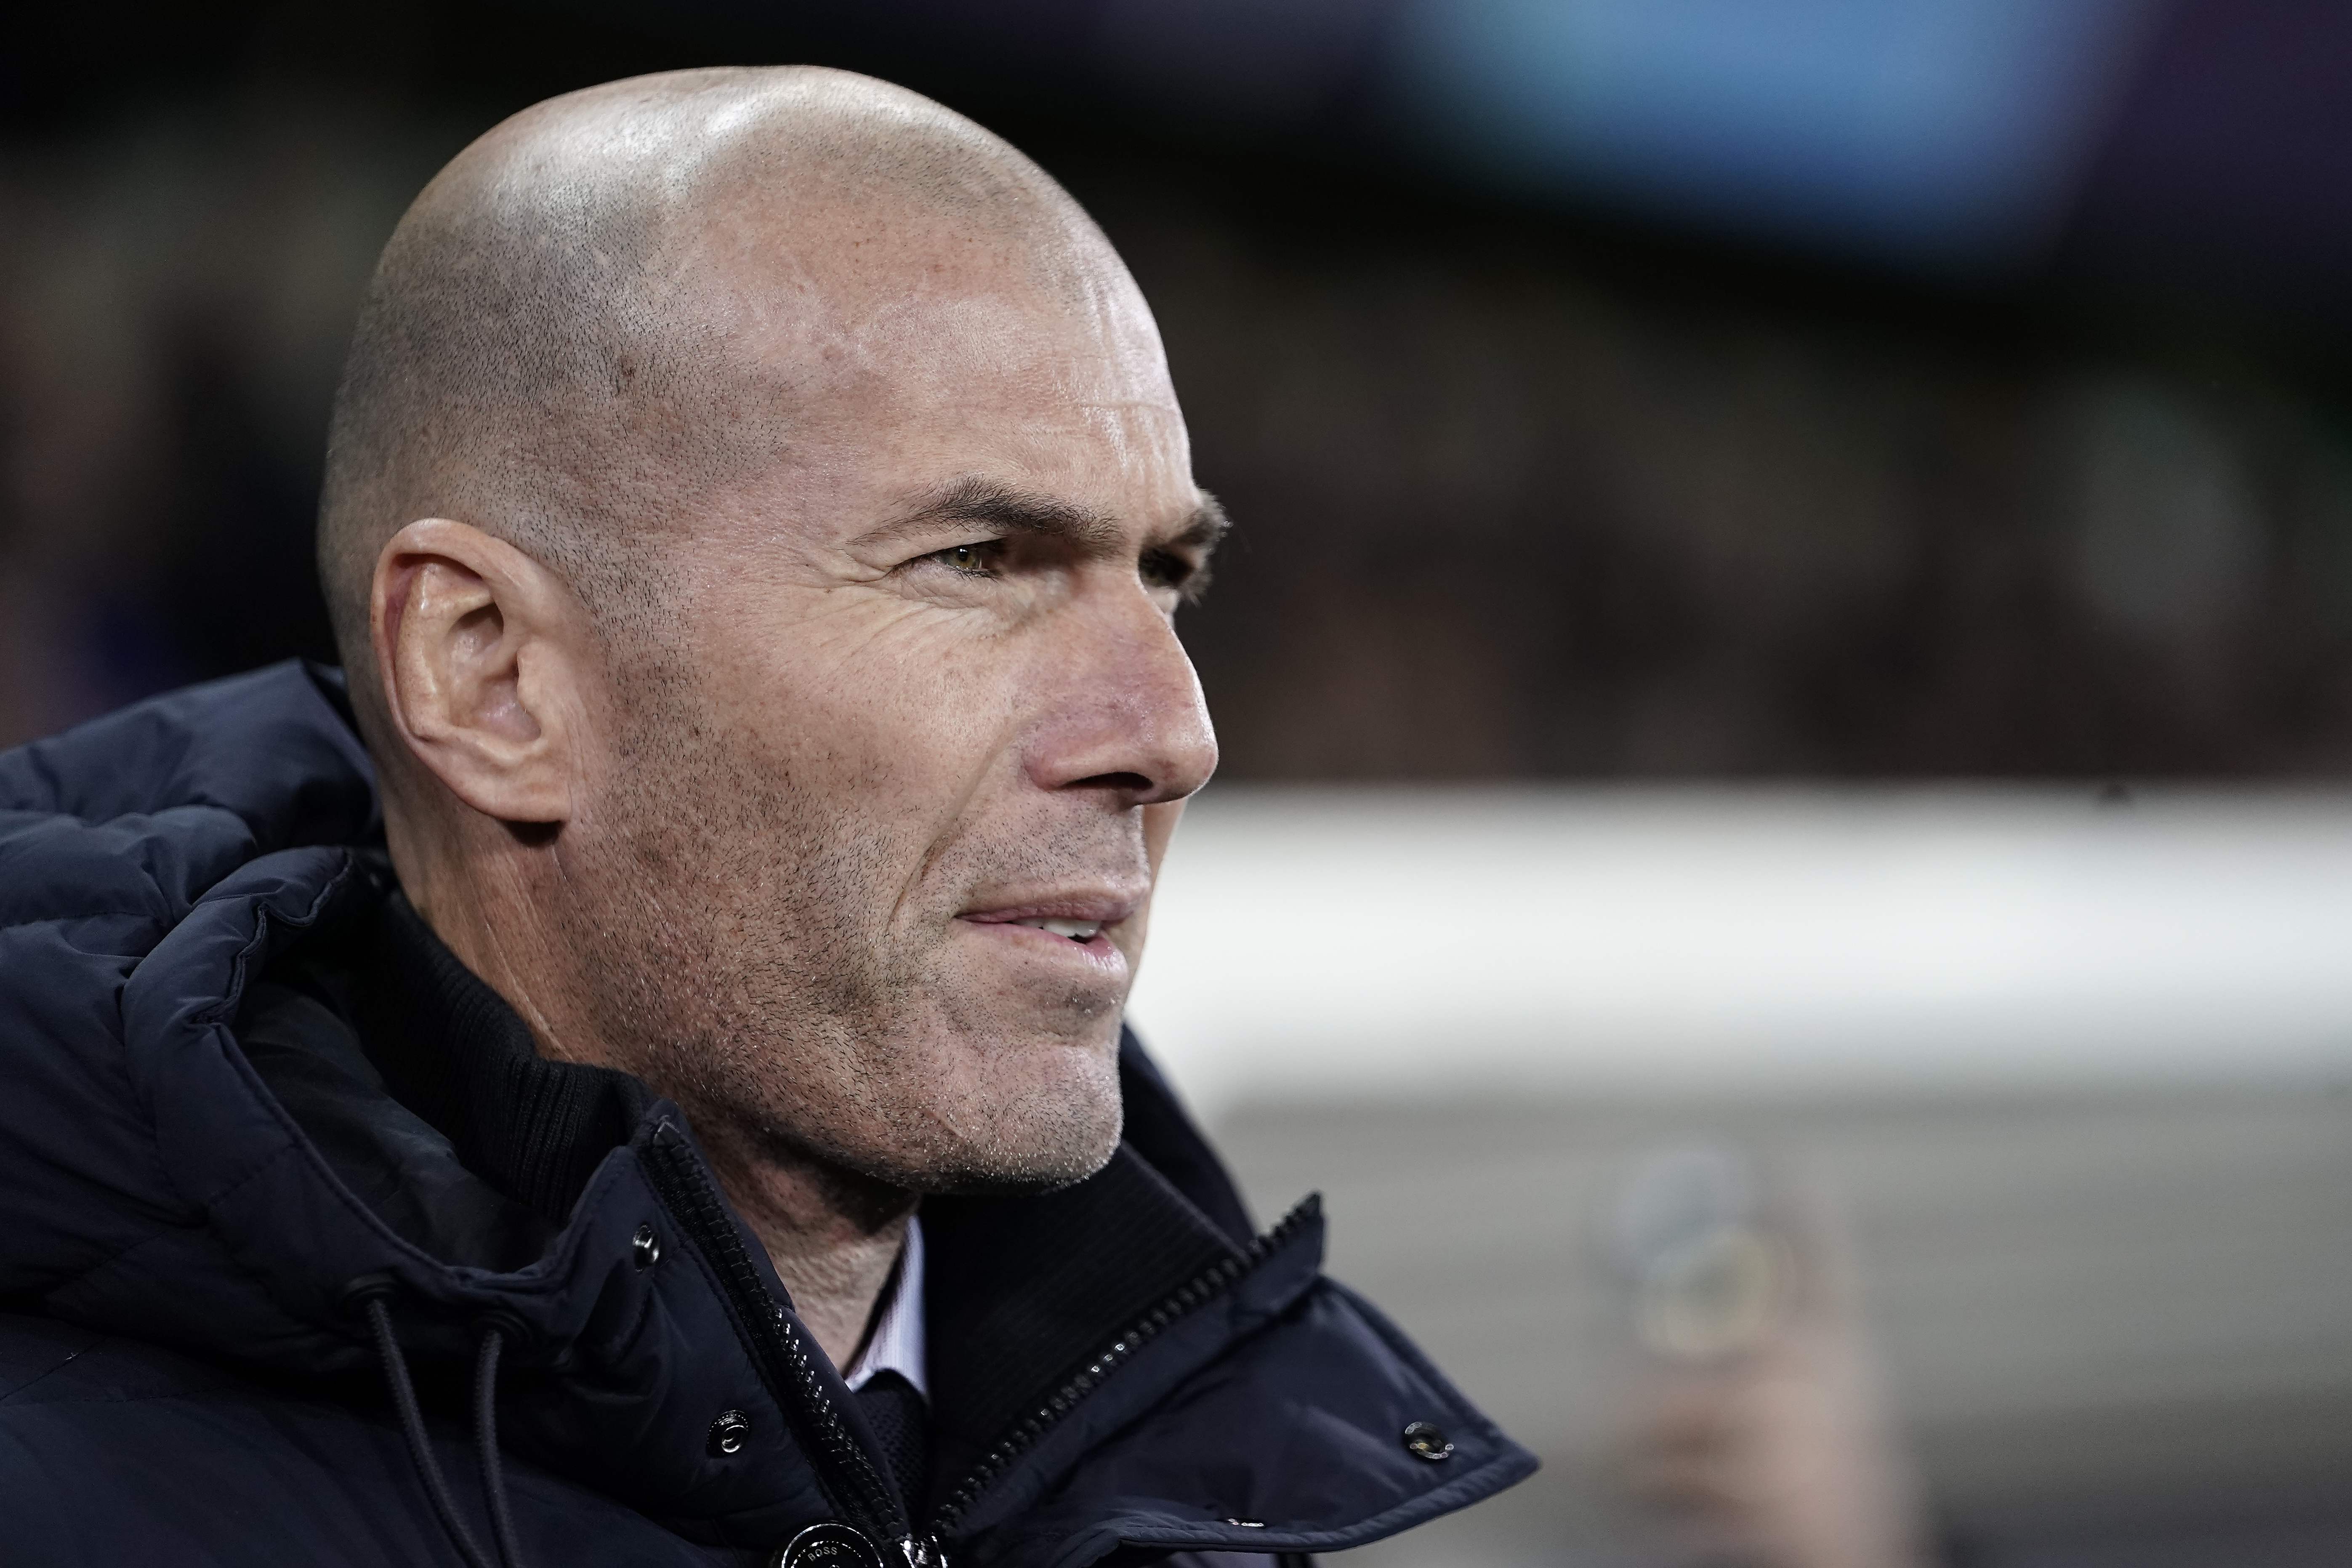 El técnico del Real Madrid, Zinedine Zidane. (Foto Prensa Libre: AFP)